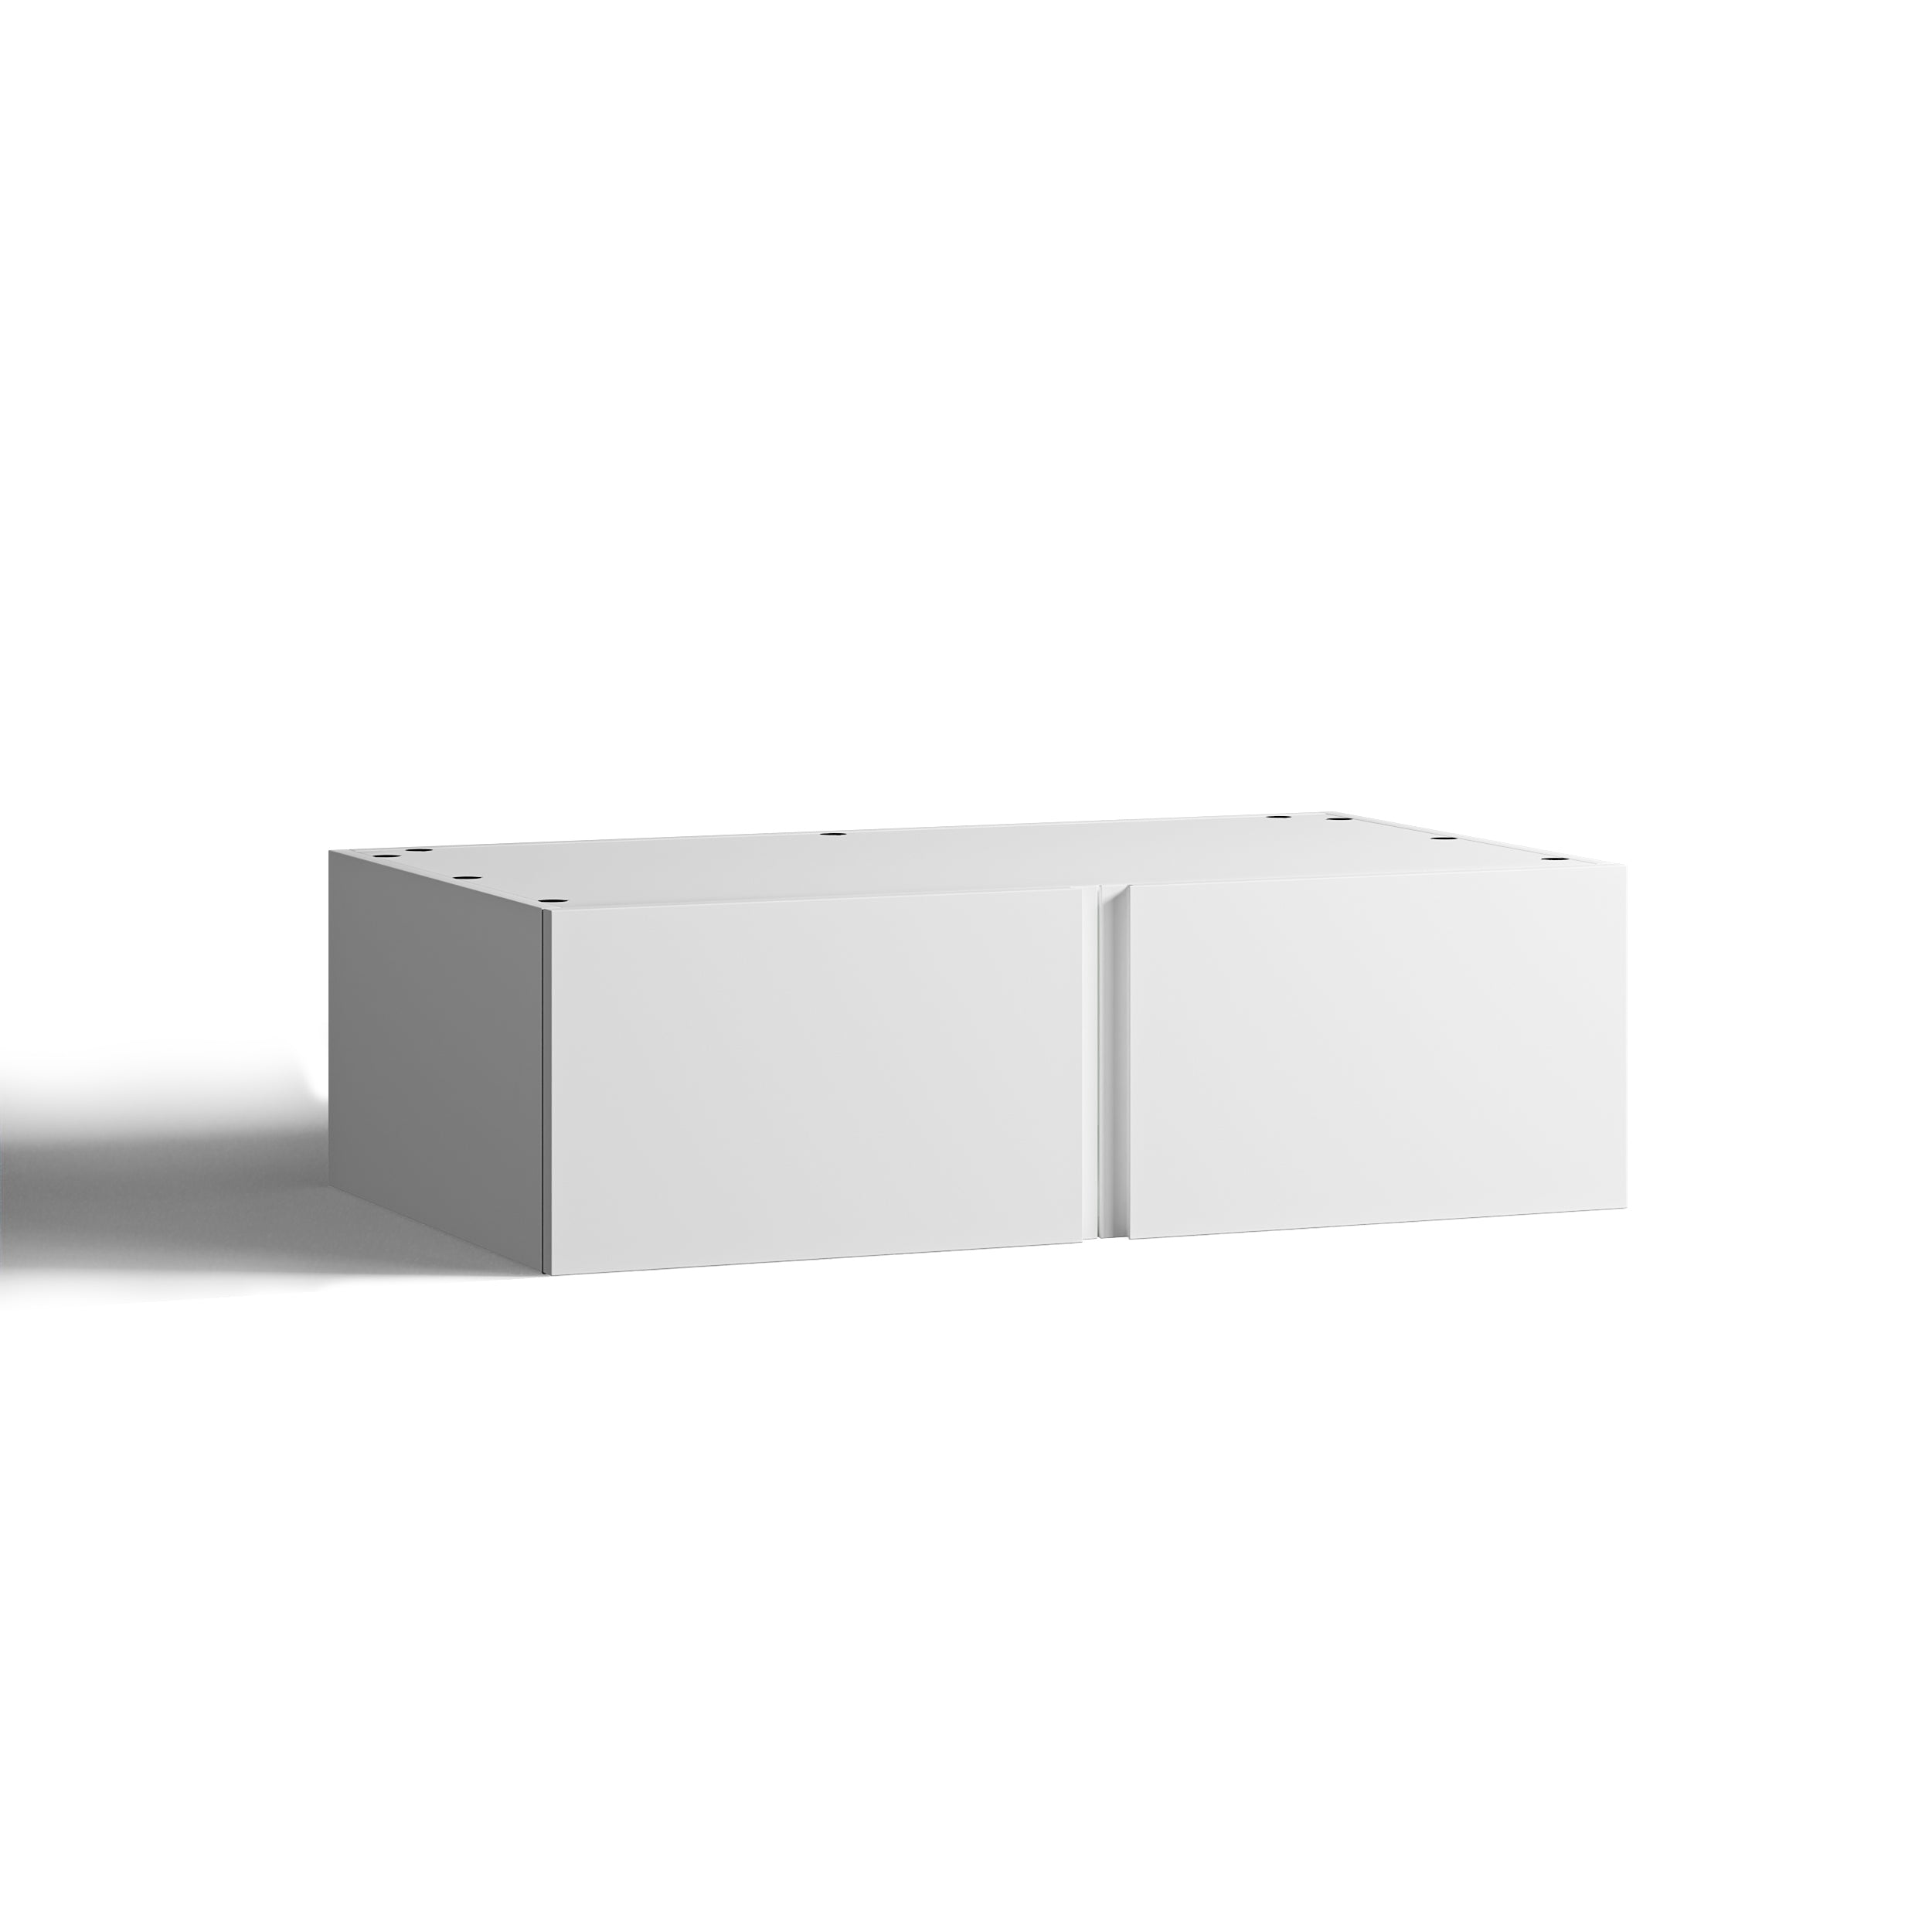 100x30 - Cabinet (58cm D) w 2 Doors - Finger Pull - RAW - PAX